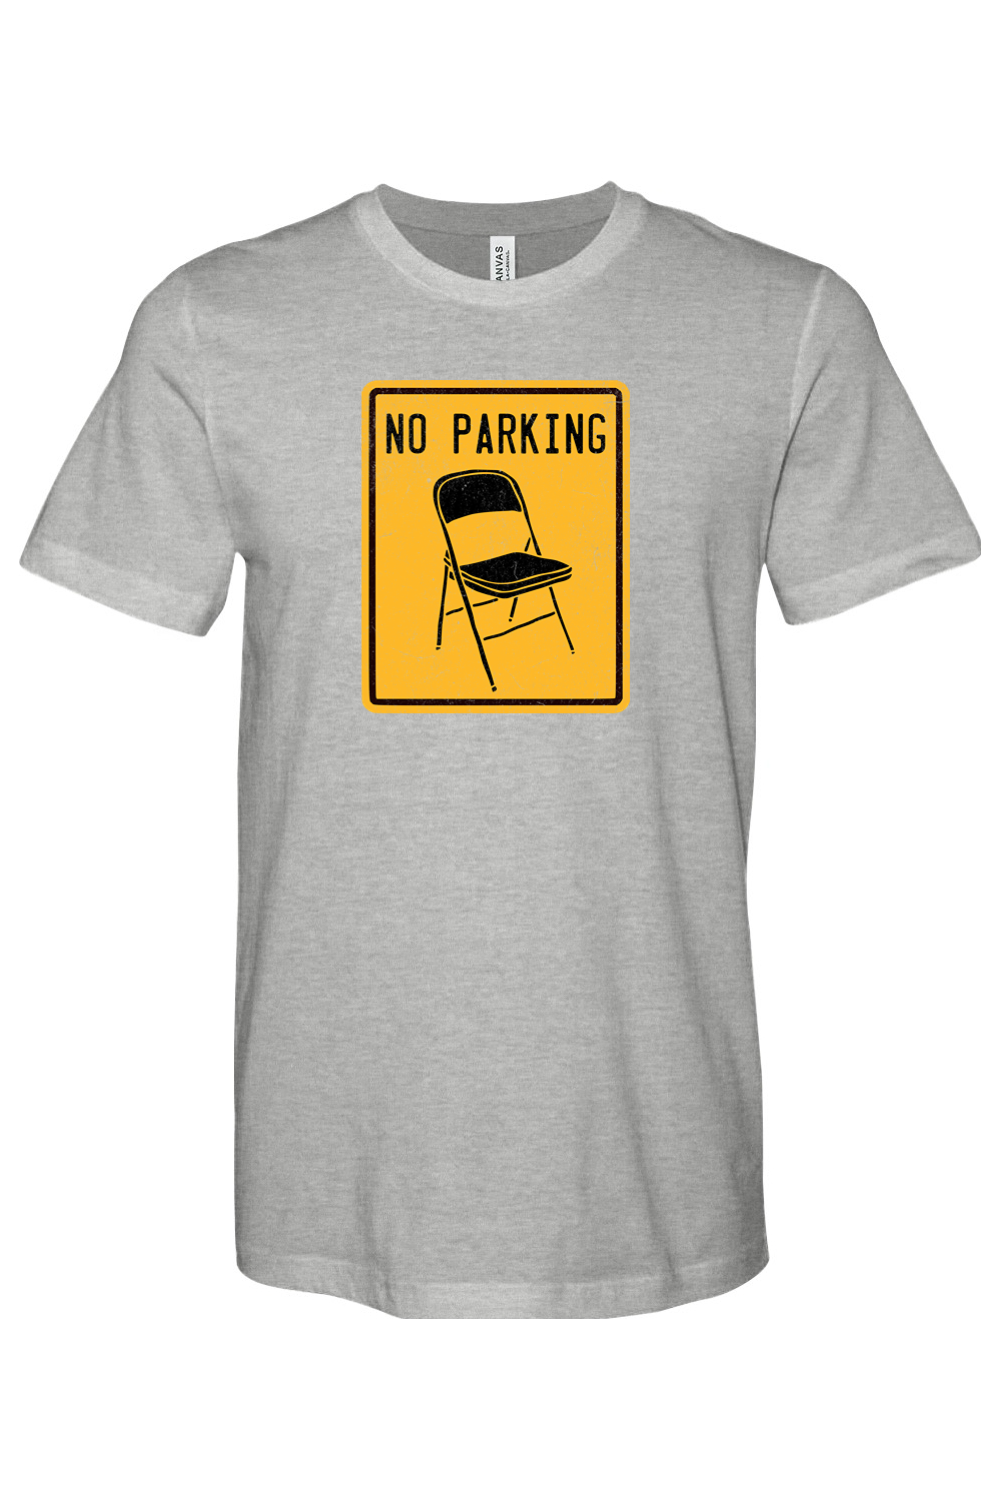 Parking Chair - Yinzylvania